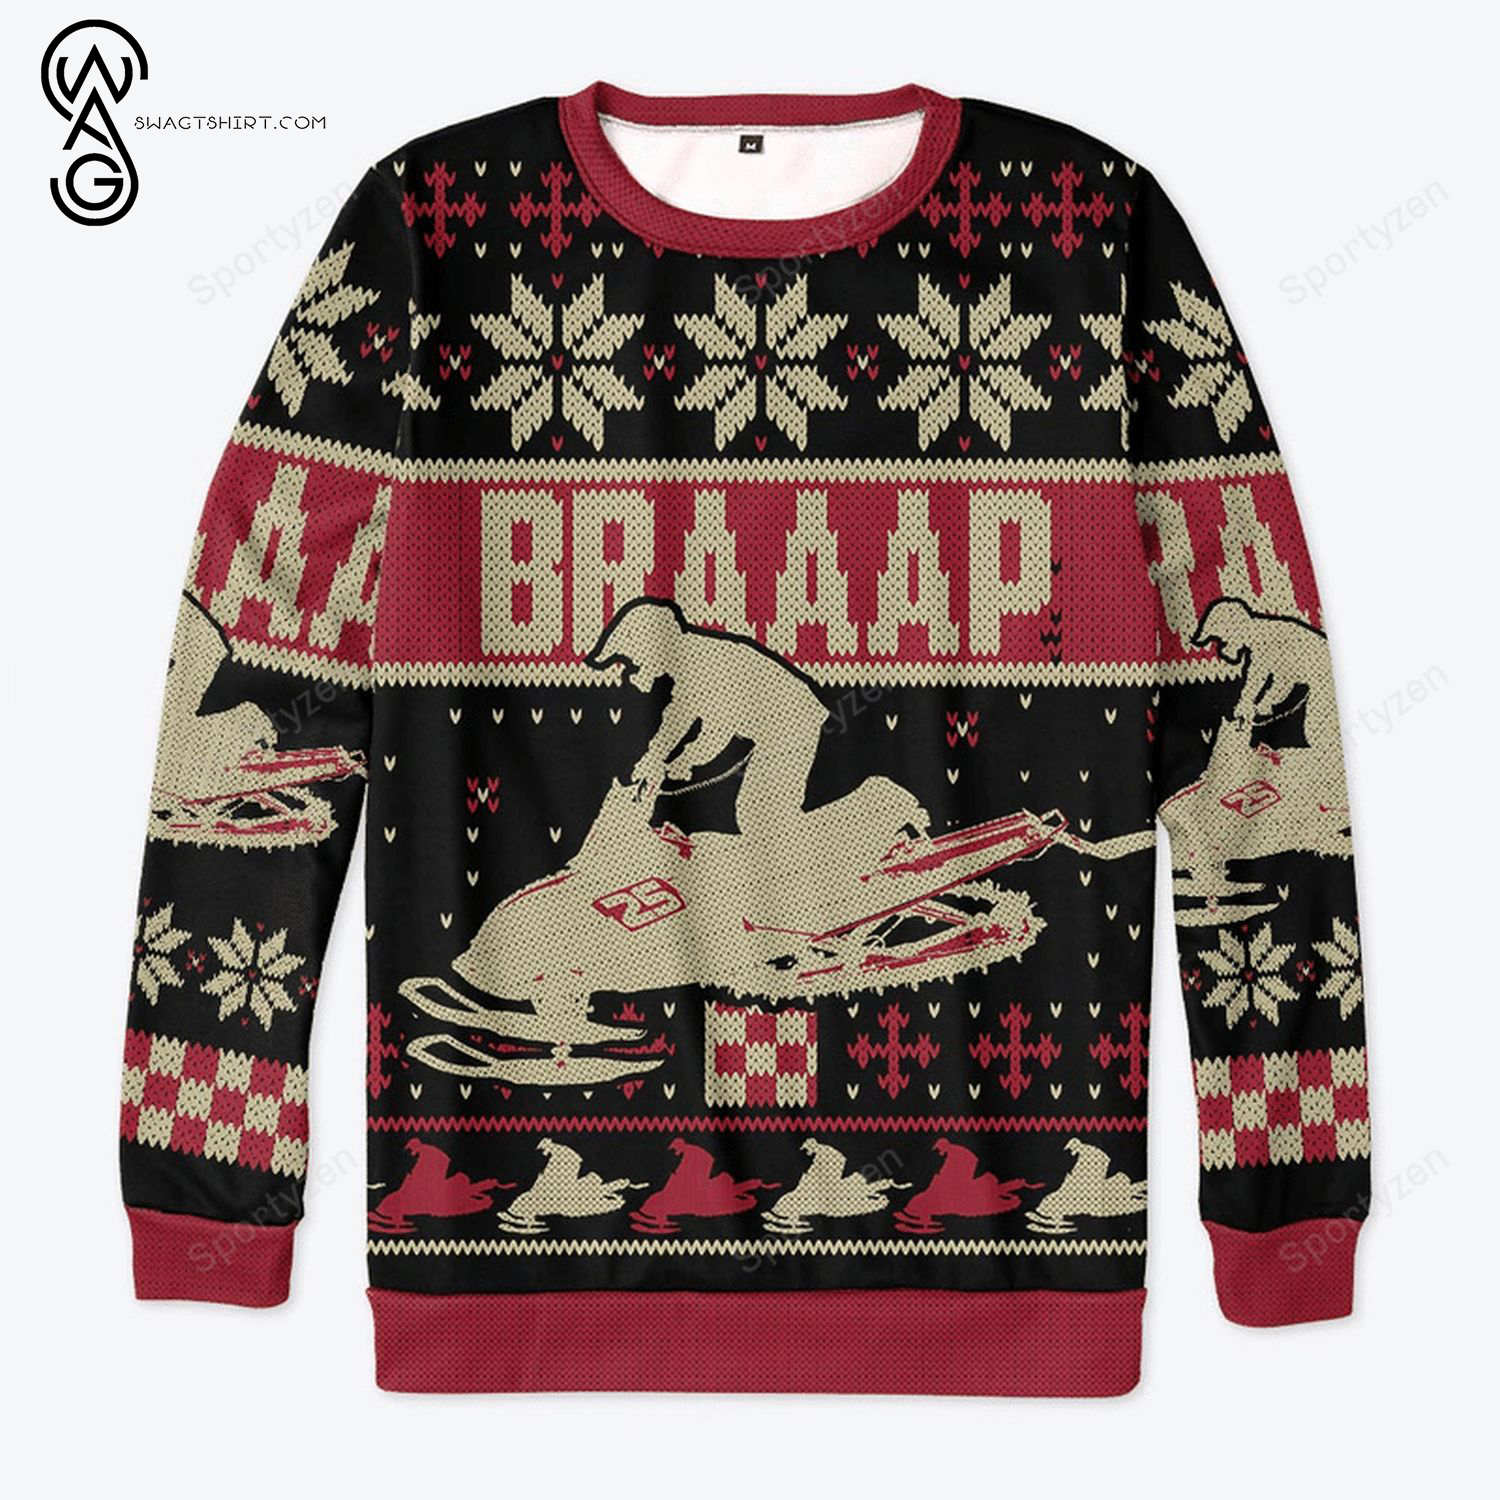 Snowmobile Braaap Full Print Ugly Christmas Sweater